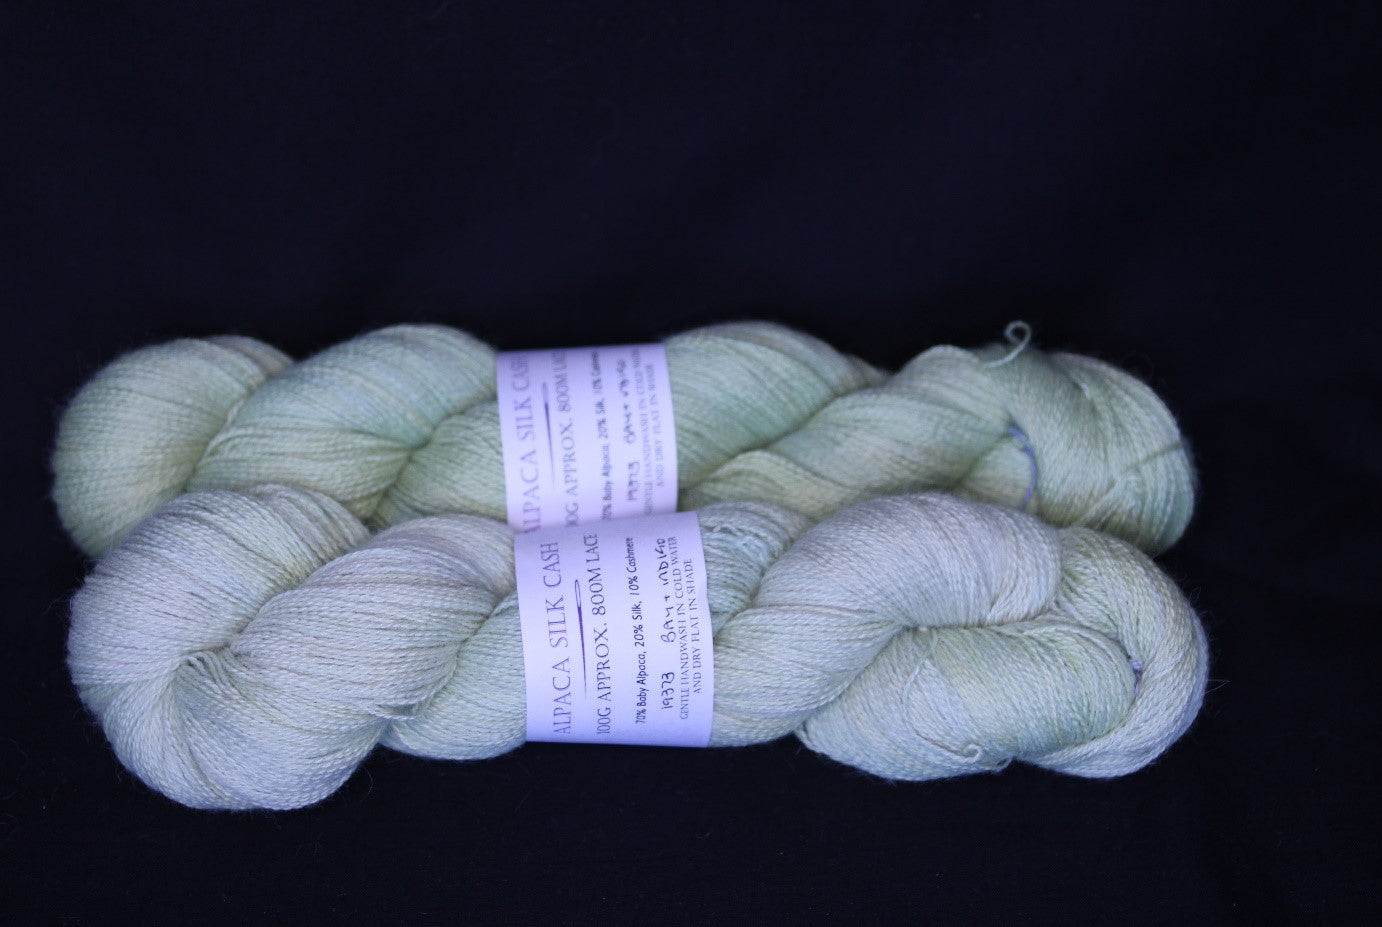 Pale green Haw base lace alpaca silk cashmere